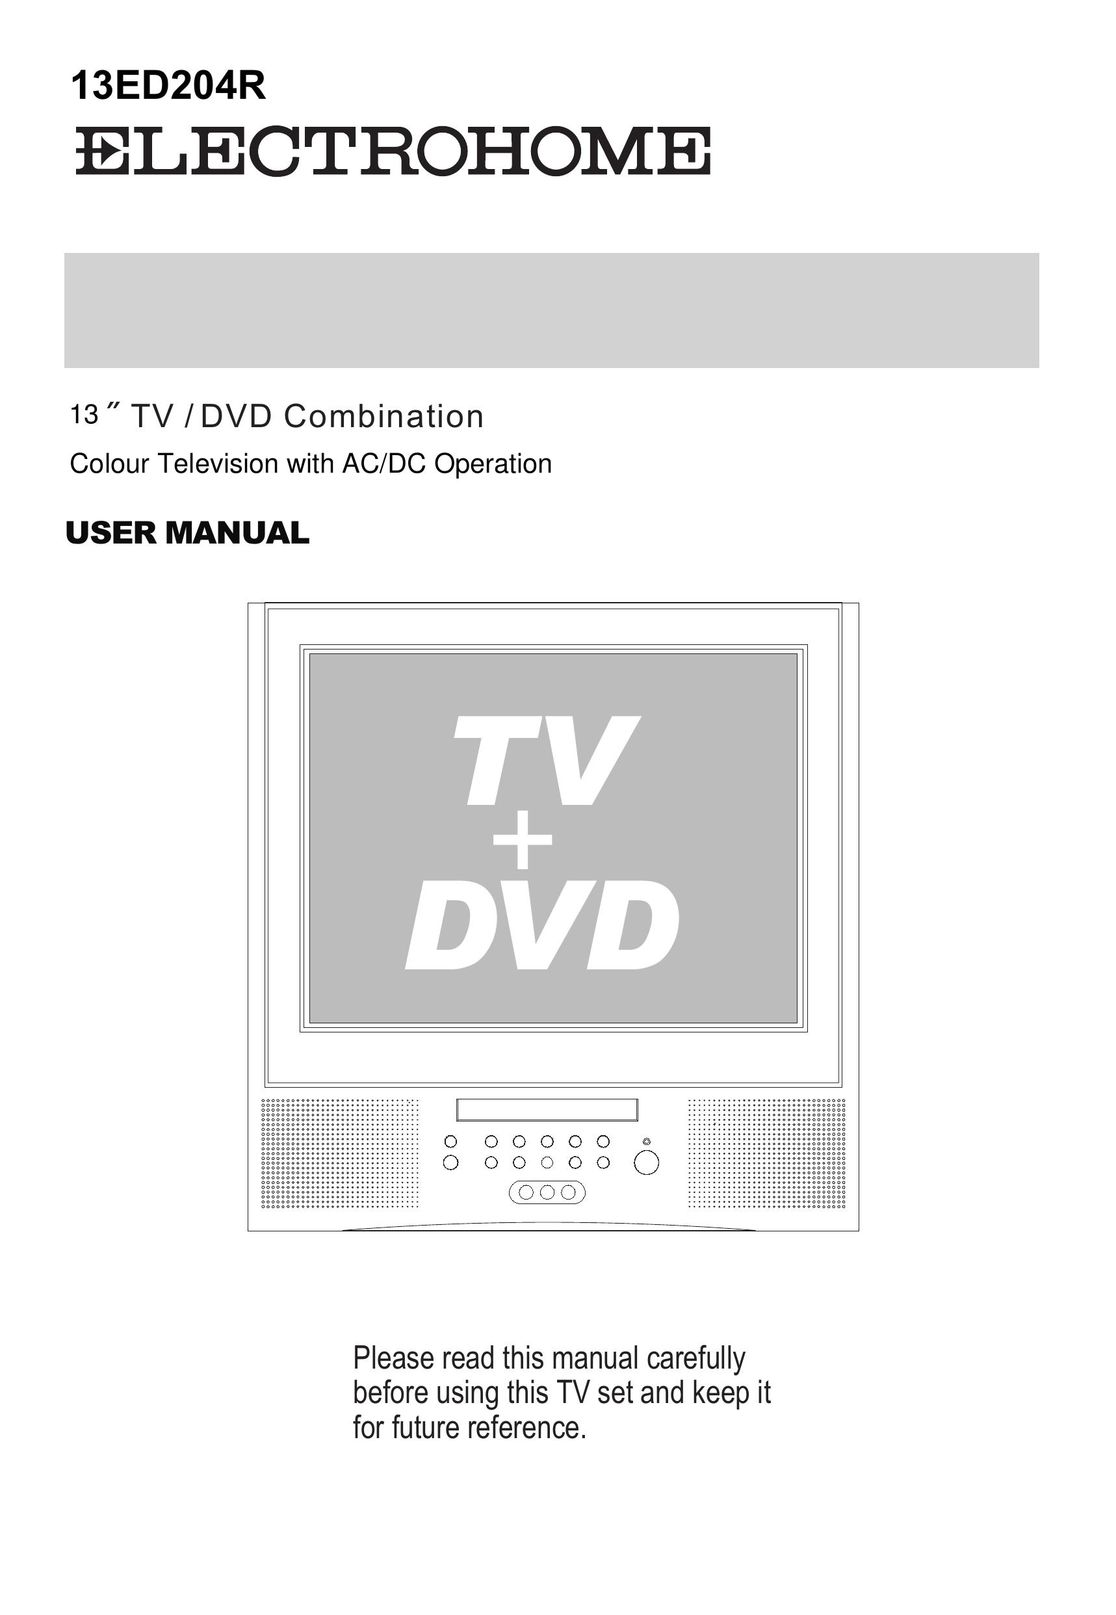 Electrohome 13ED204R TV DVD Combo User Manual